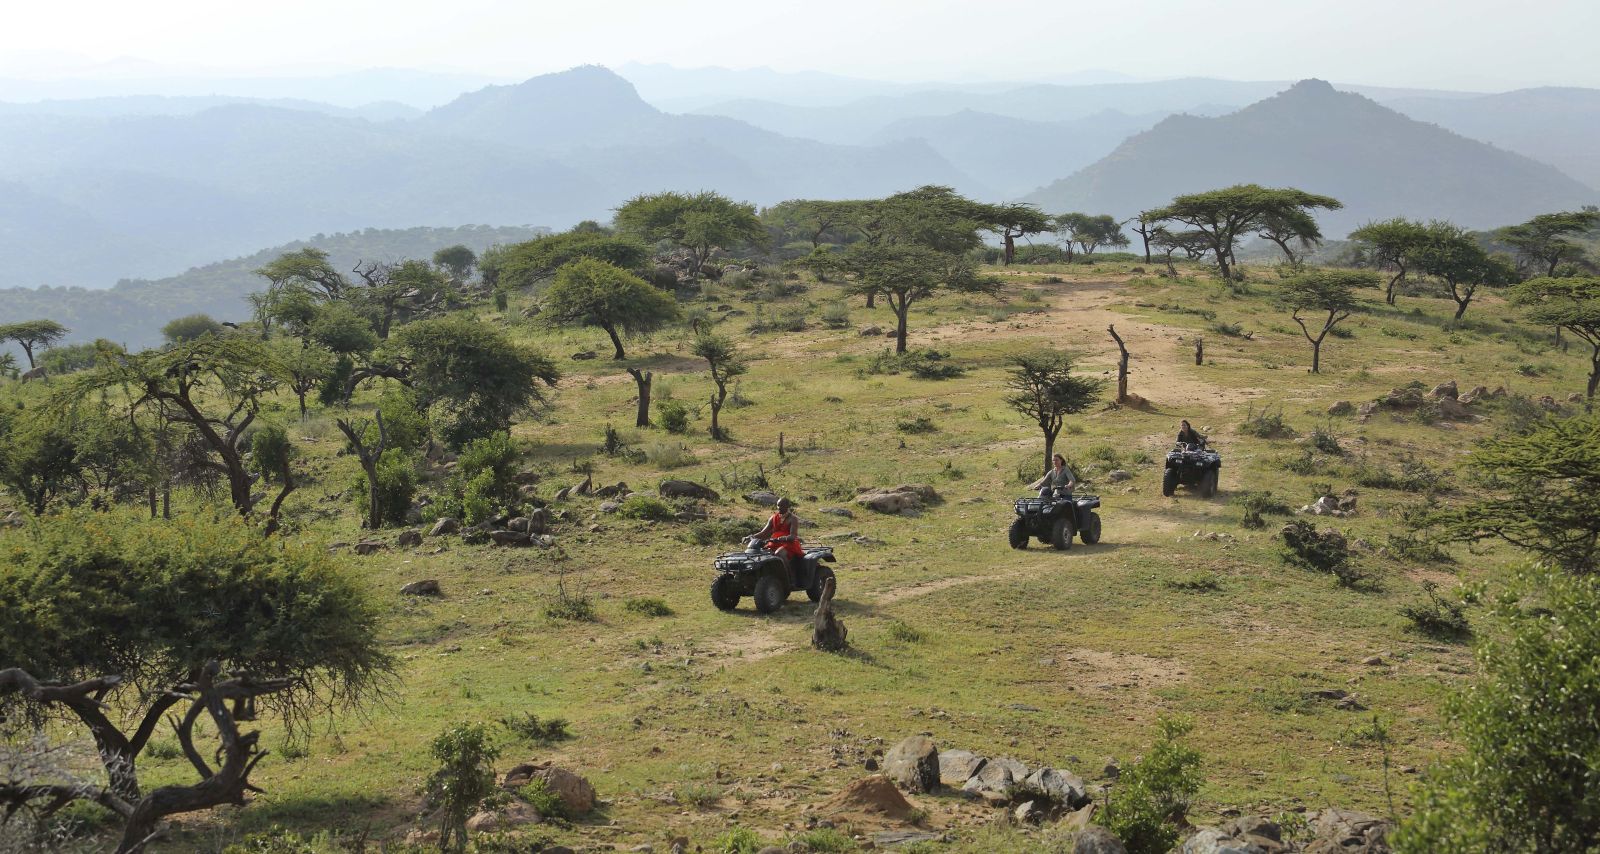 Quad biking through the conservancy at The Sanctuary at Ol Lentille Kenya